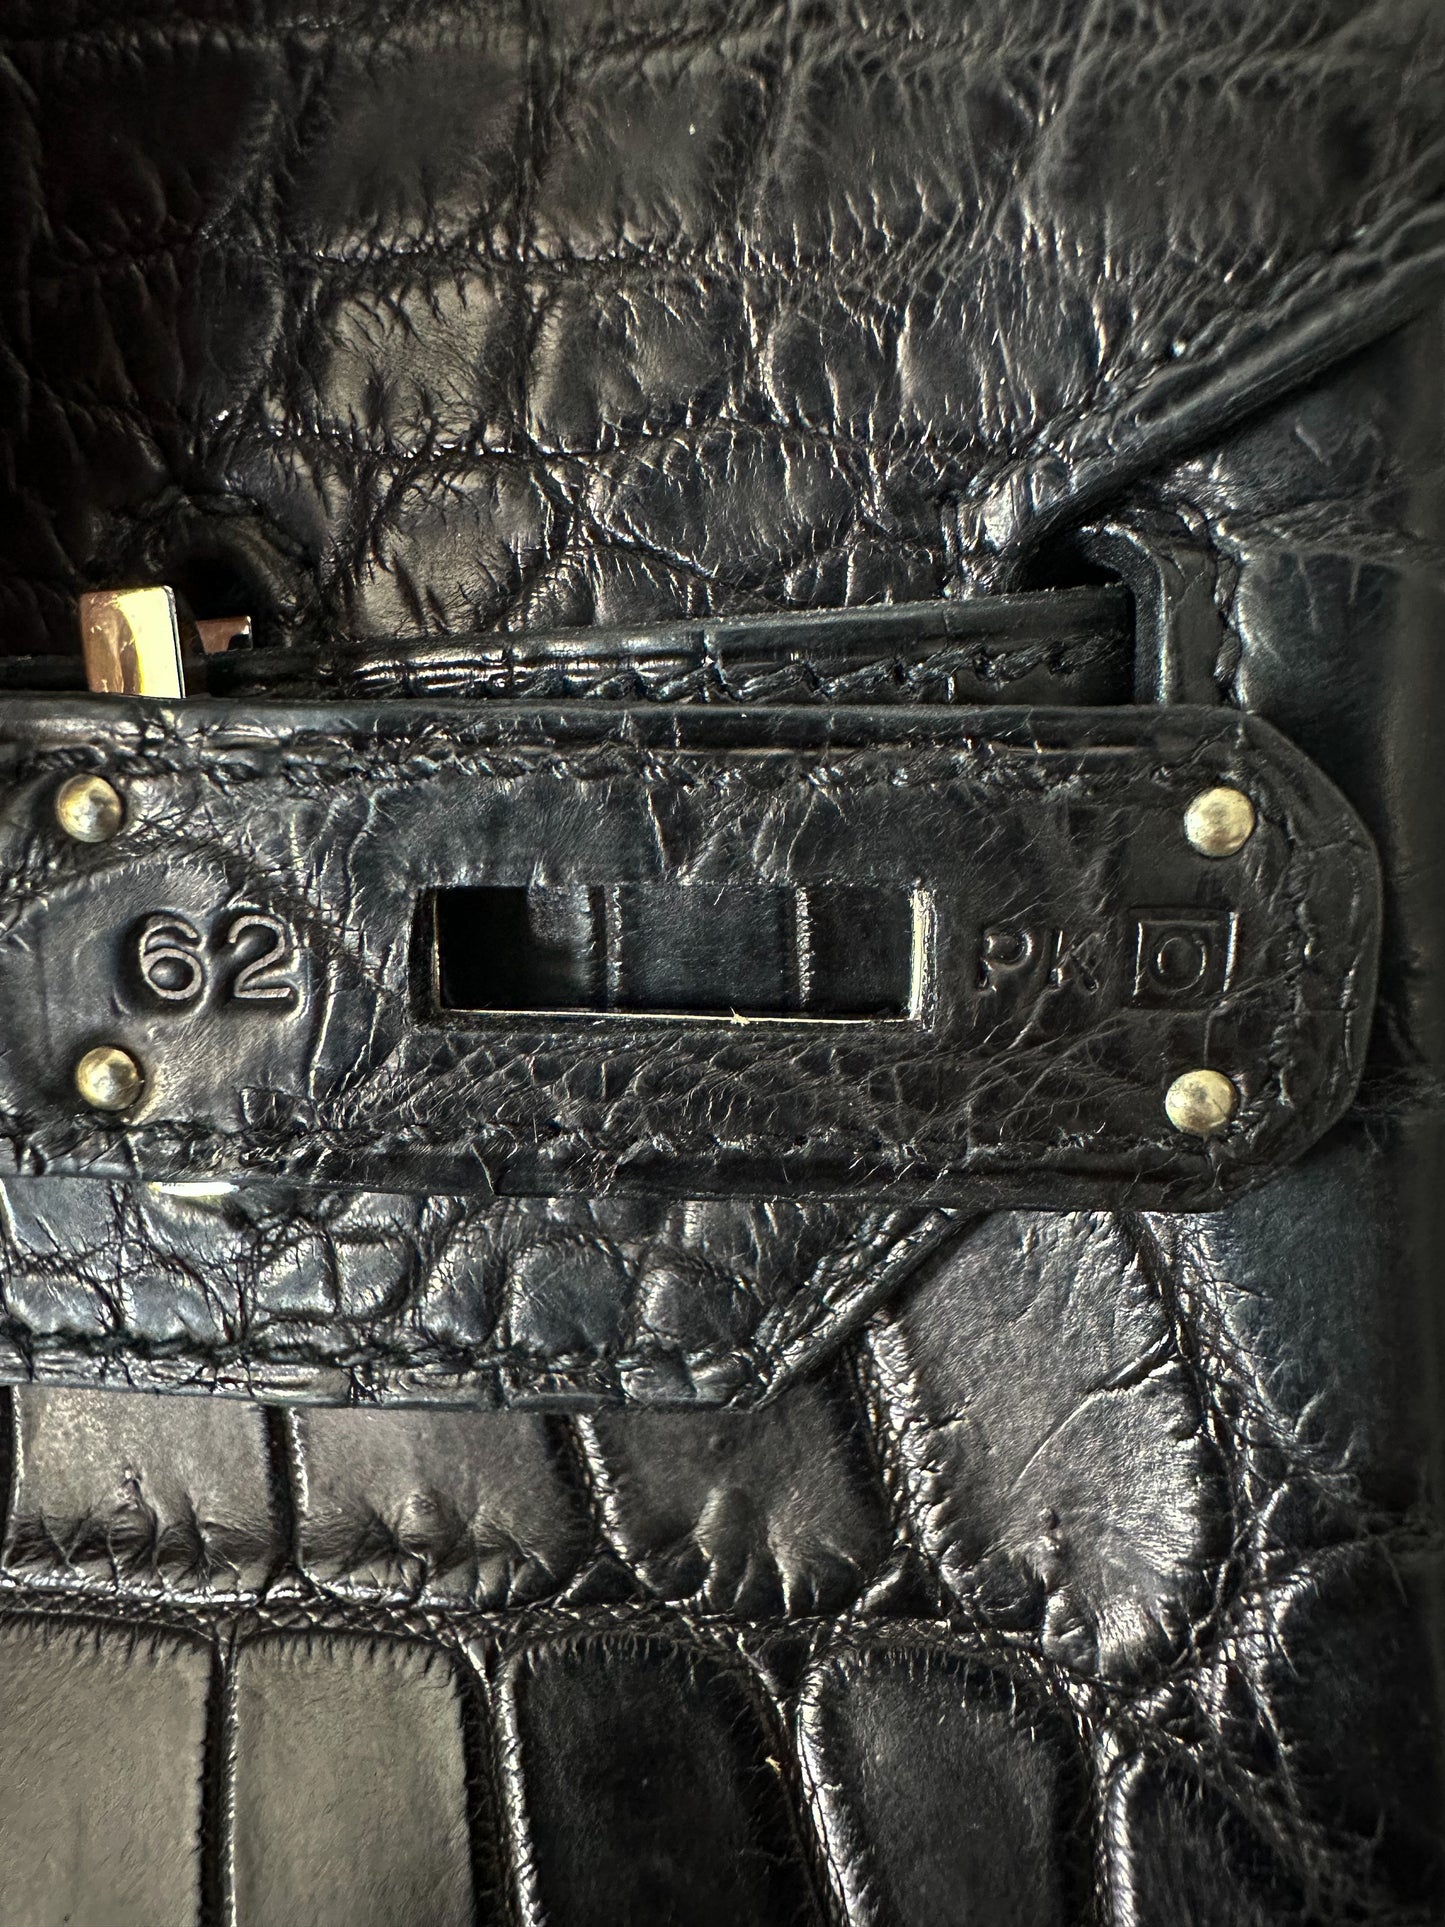 Brand New Hermes Birkin 30 “So black” Matte Crocodile Niloticus ○ Labellov  ○ Buy and Sell Authentic Luxury